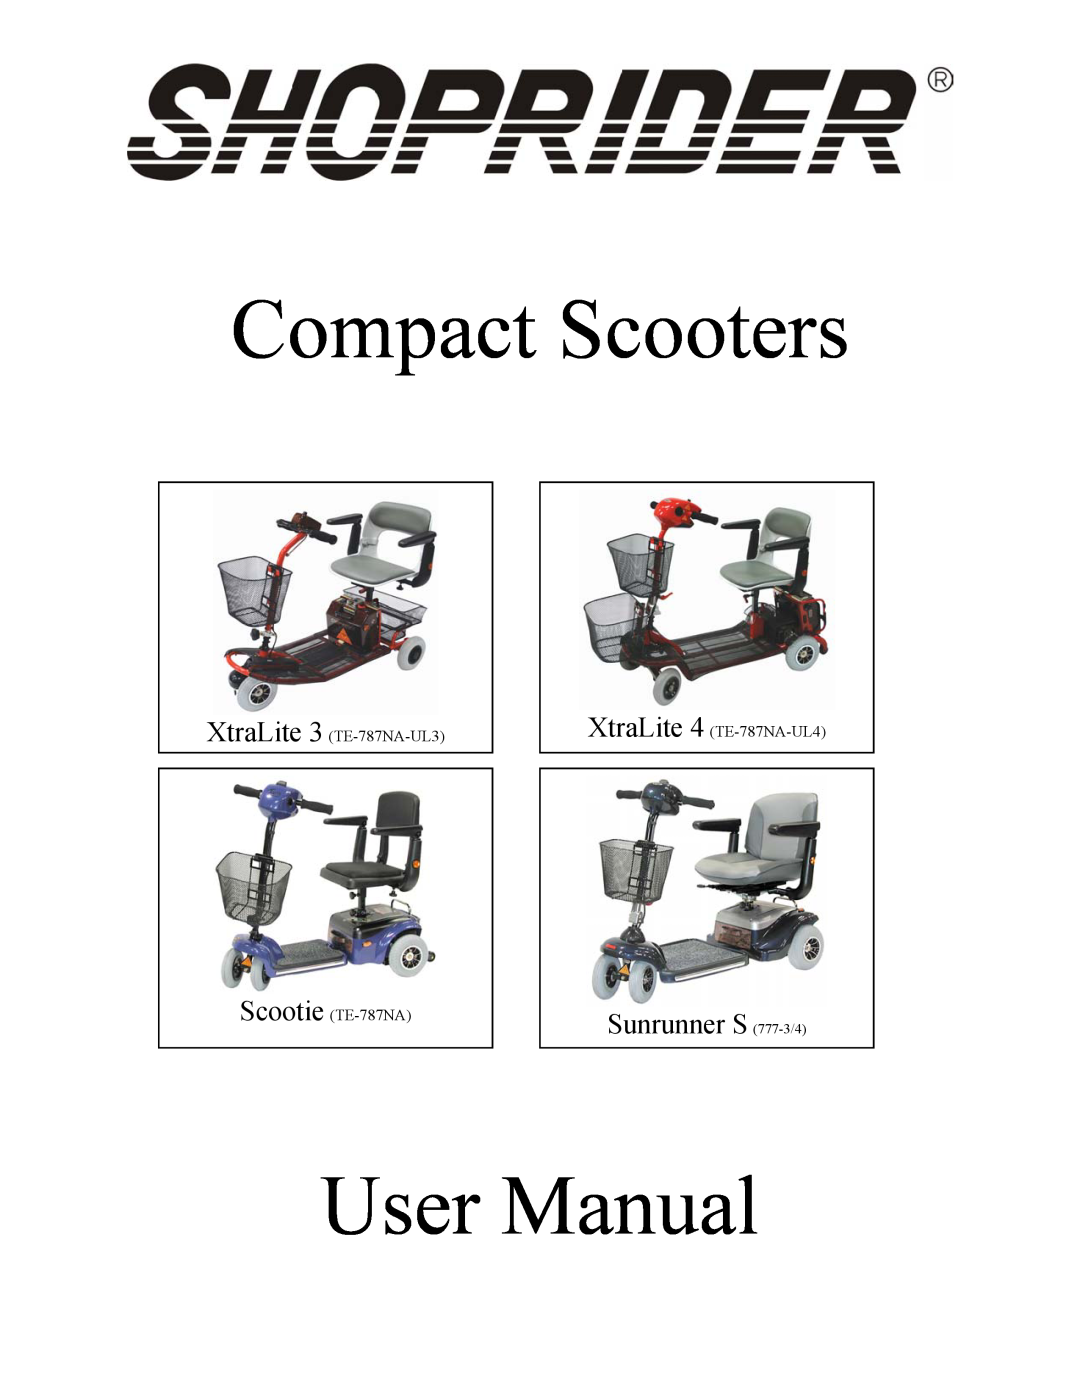 Shoprider Sunrunner 777-3/4 manual Compact Scooters, Sunrunner S 777-3/4, XtraLite 3 TE-787NA-UL3 Scootie TE-787NA 